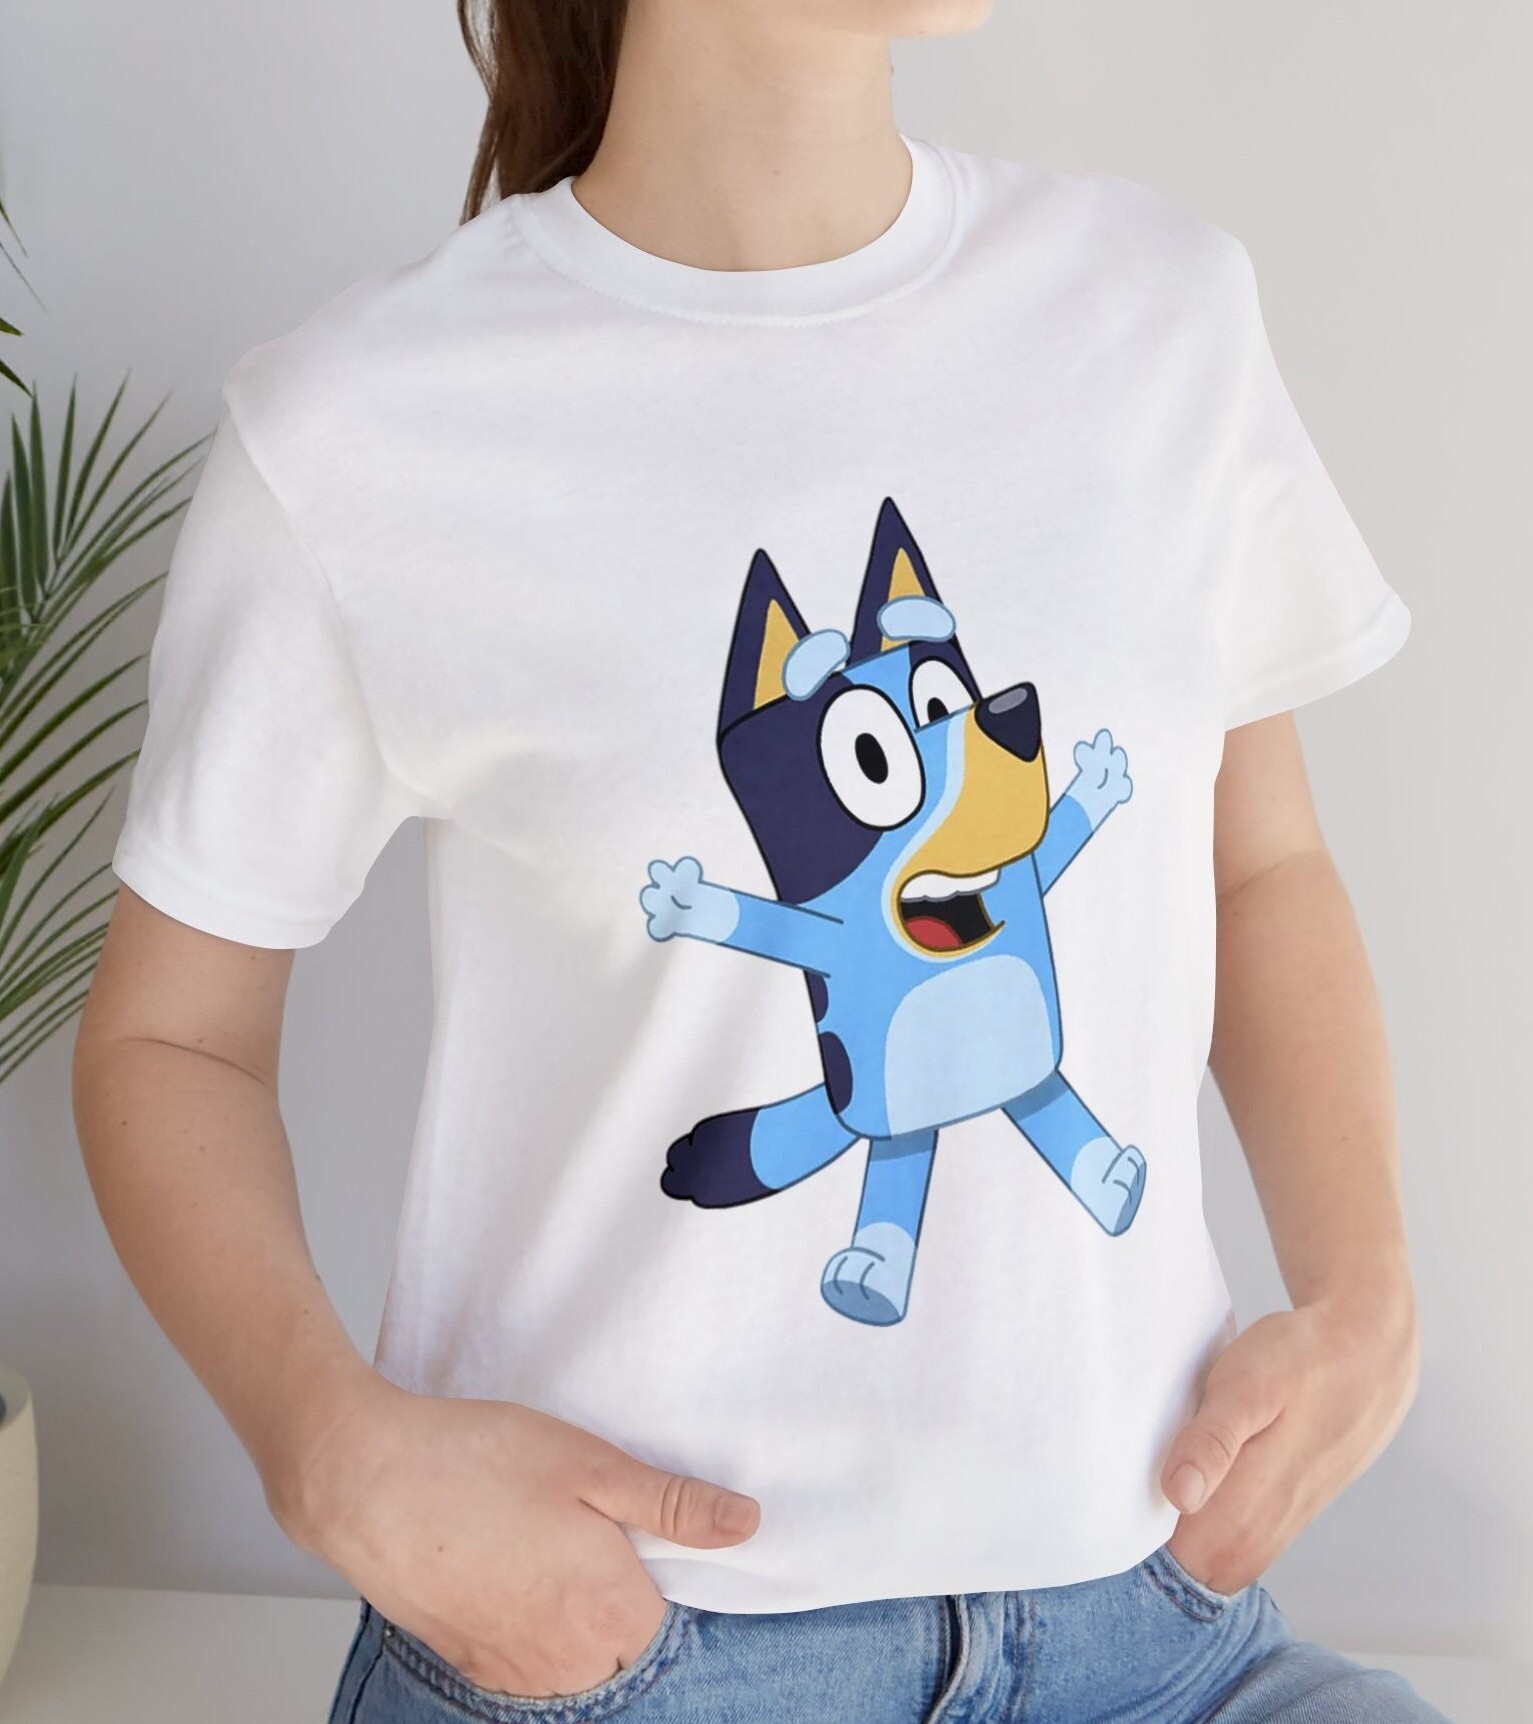 Bluey T Shirt Adult Bluey Shirt Bluey the Dog Tshirt Cartoon Shirt